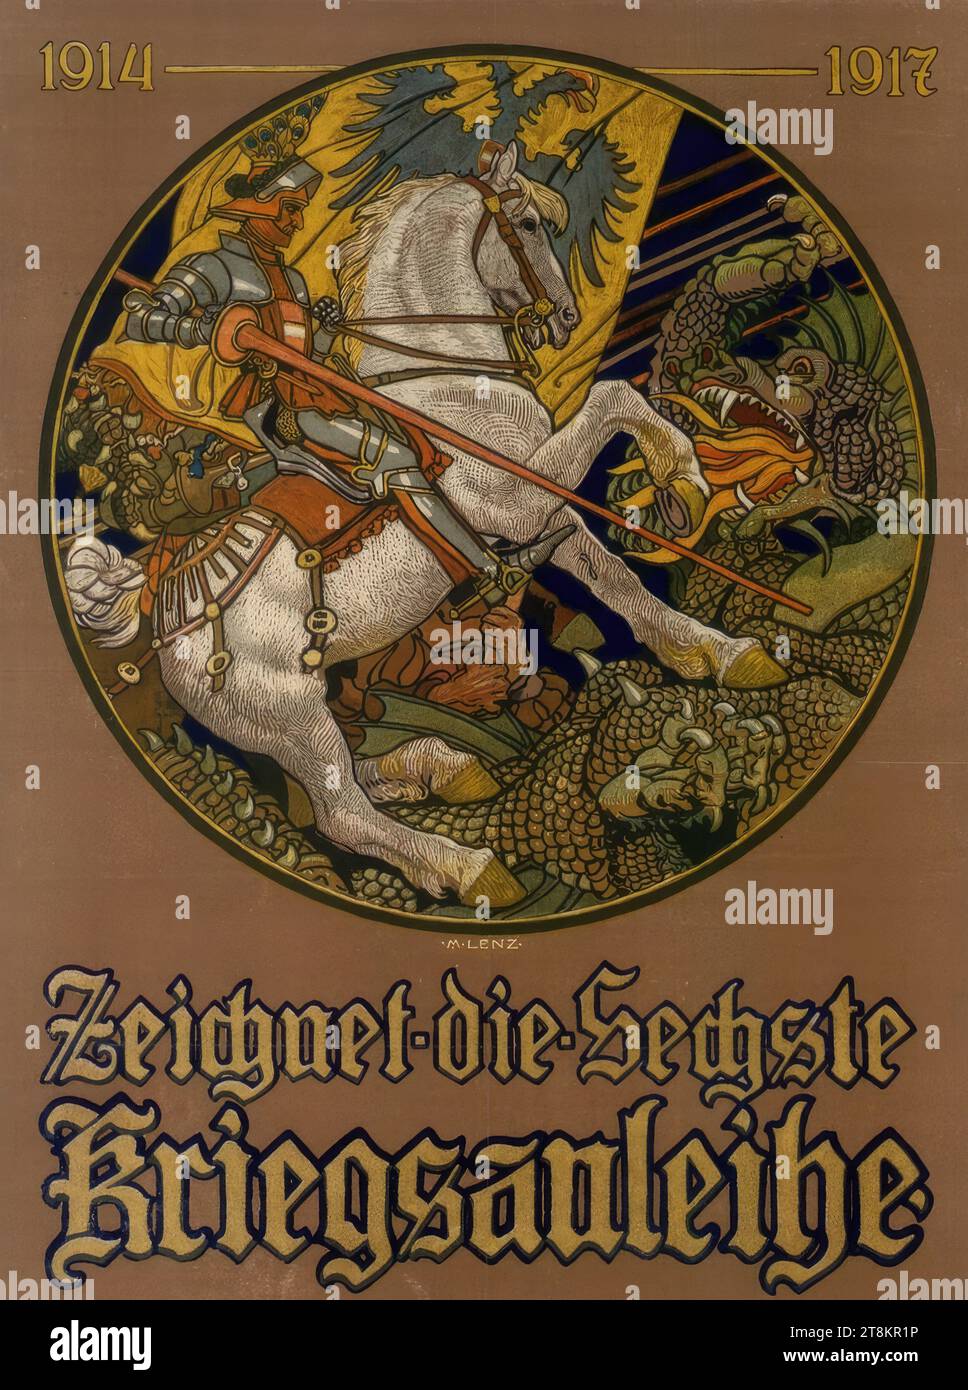 Subscribe to the Sixth War Bond; 1914 - 1917, Maximilian Lenz, Vienna 1860 - 1948 Vienna, 1917, print, color lithograph, sheet: 755 mm x 545 mm, Austria Stock Photo